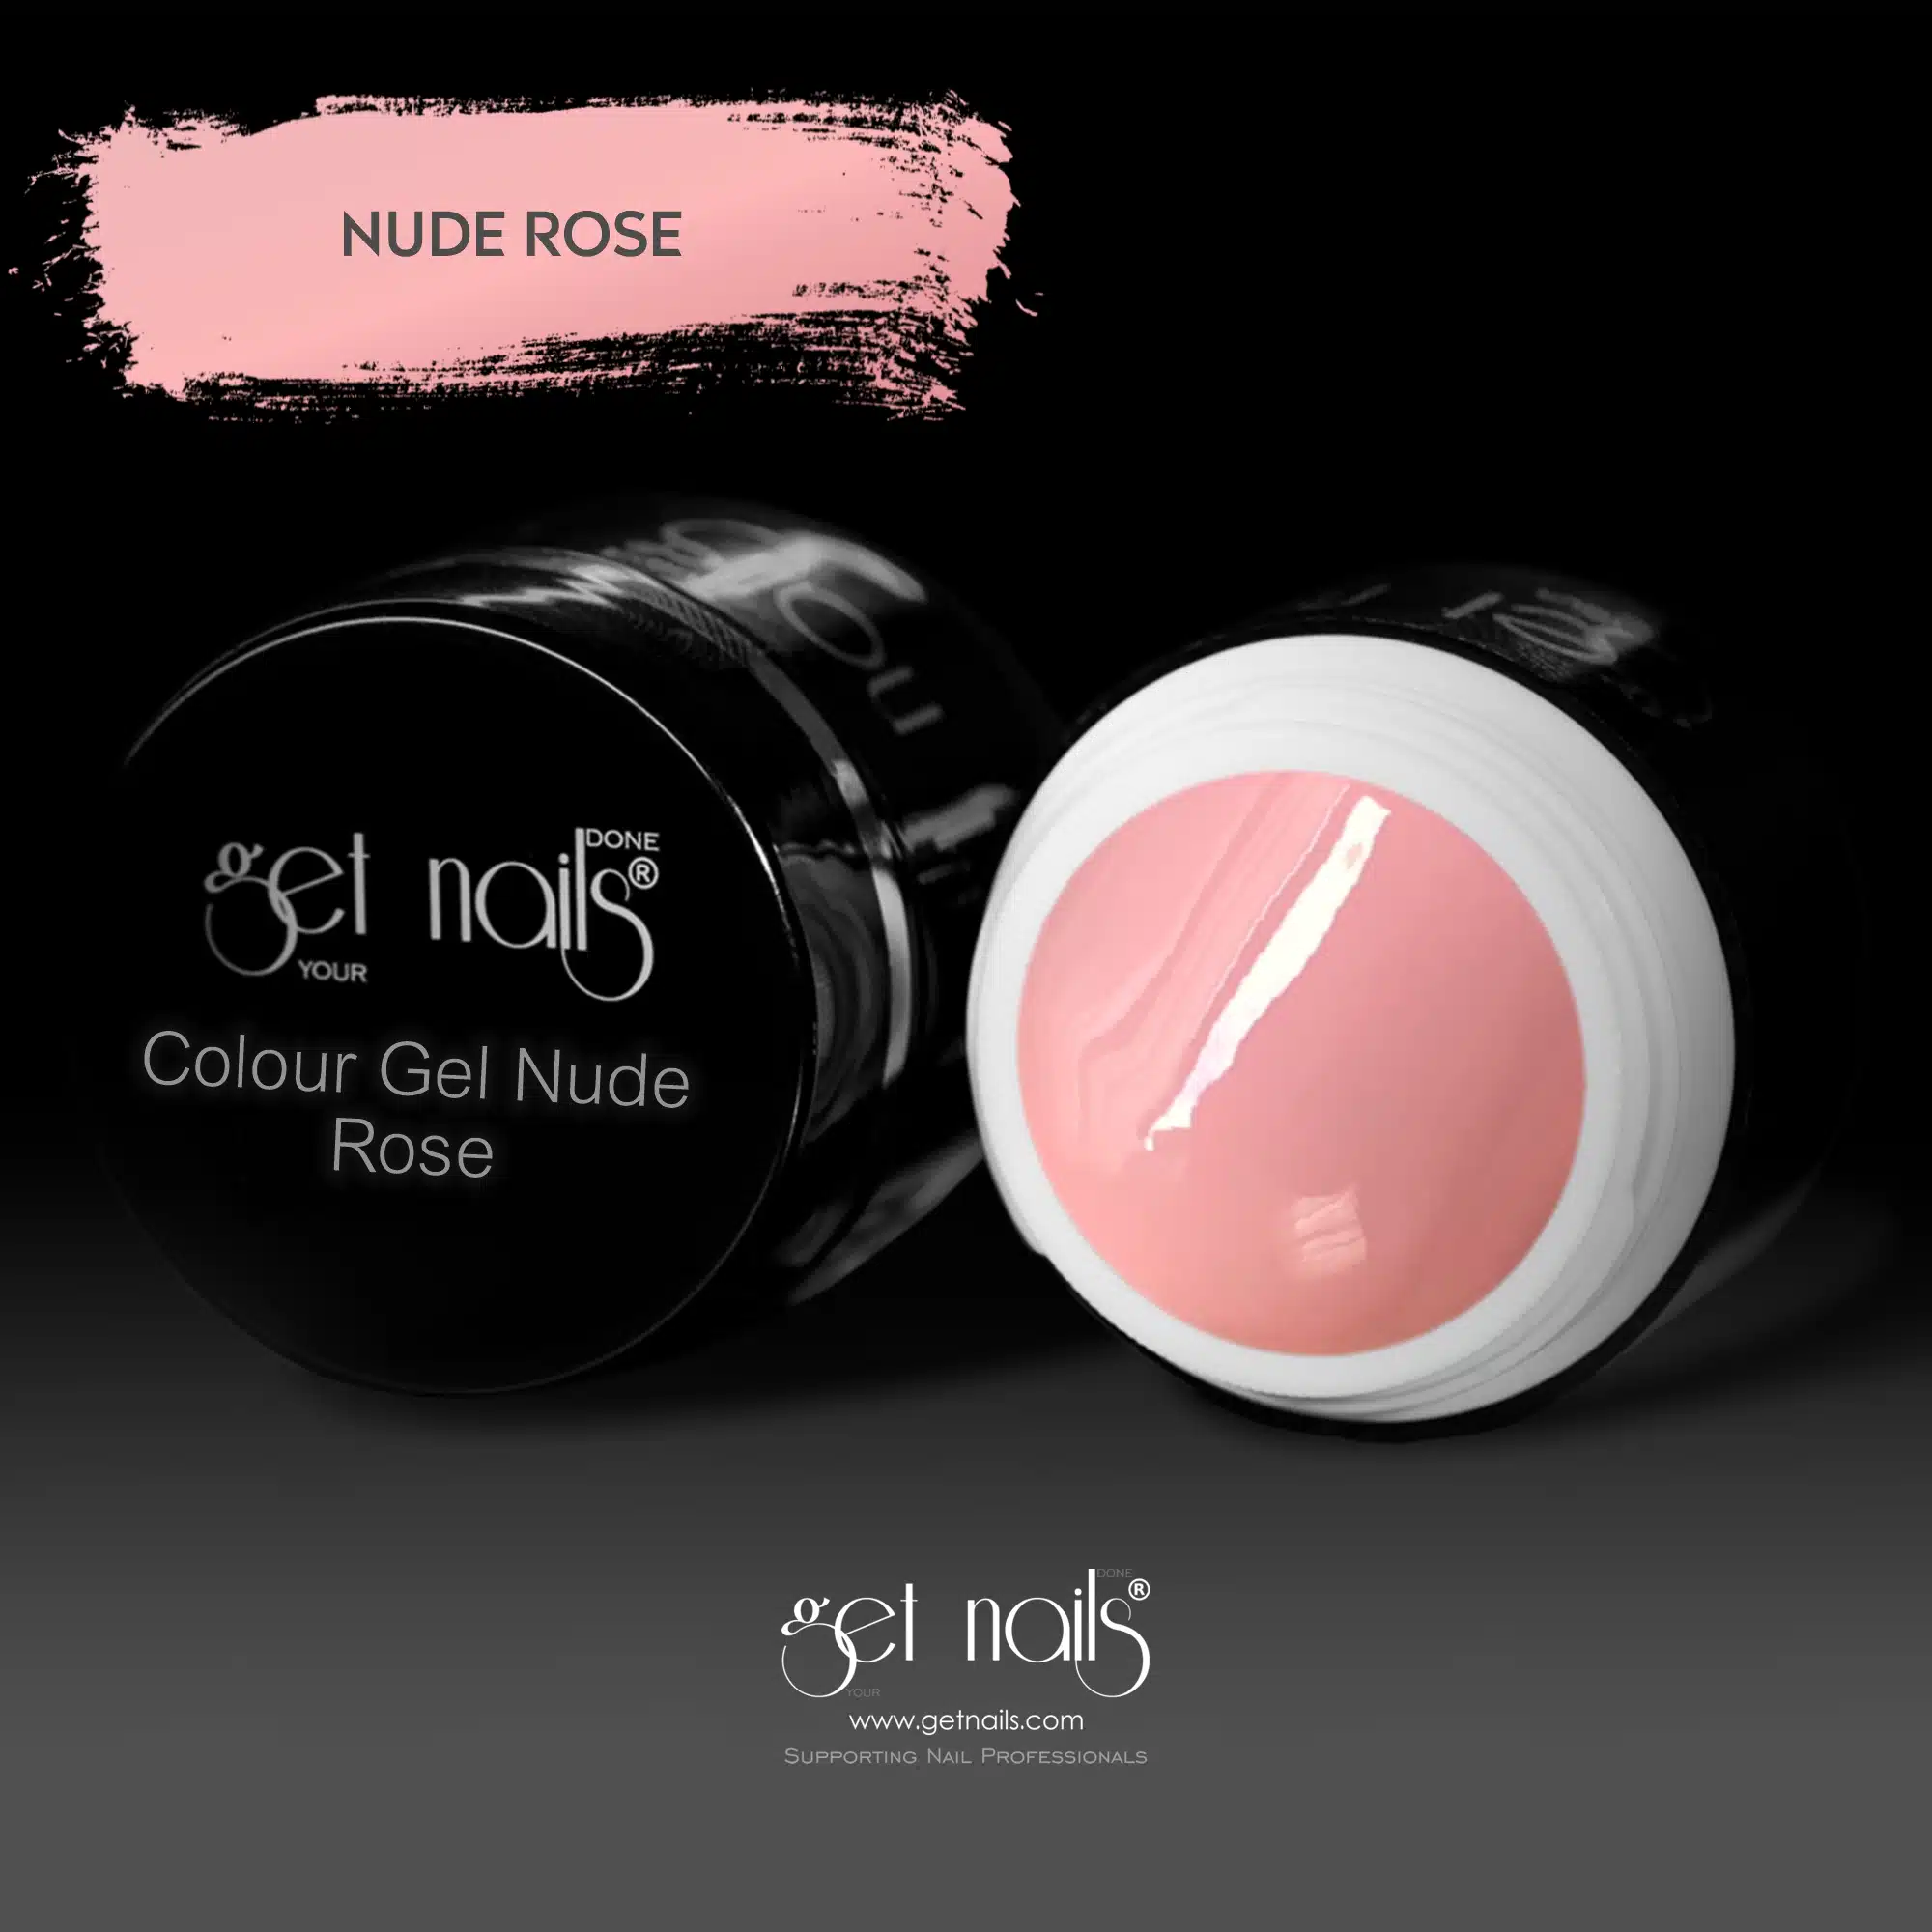 Get Nails Austria - Colour Gel Nude Rose 5g